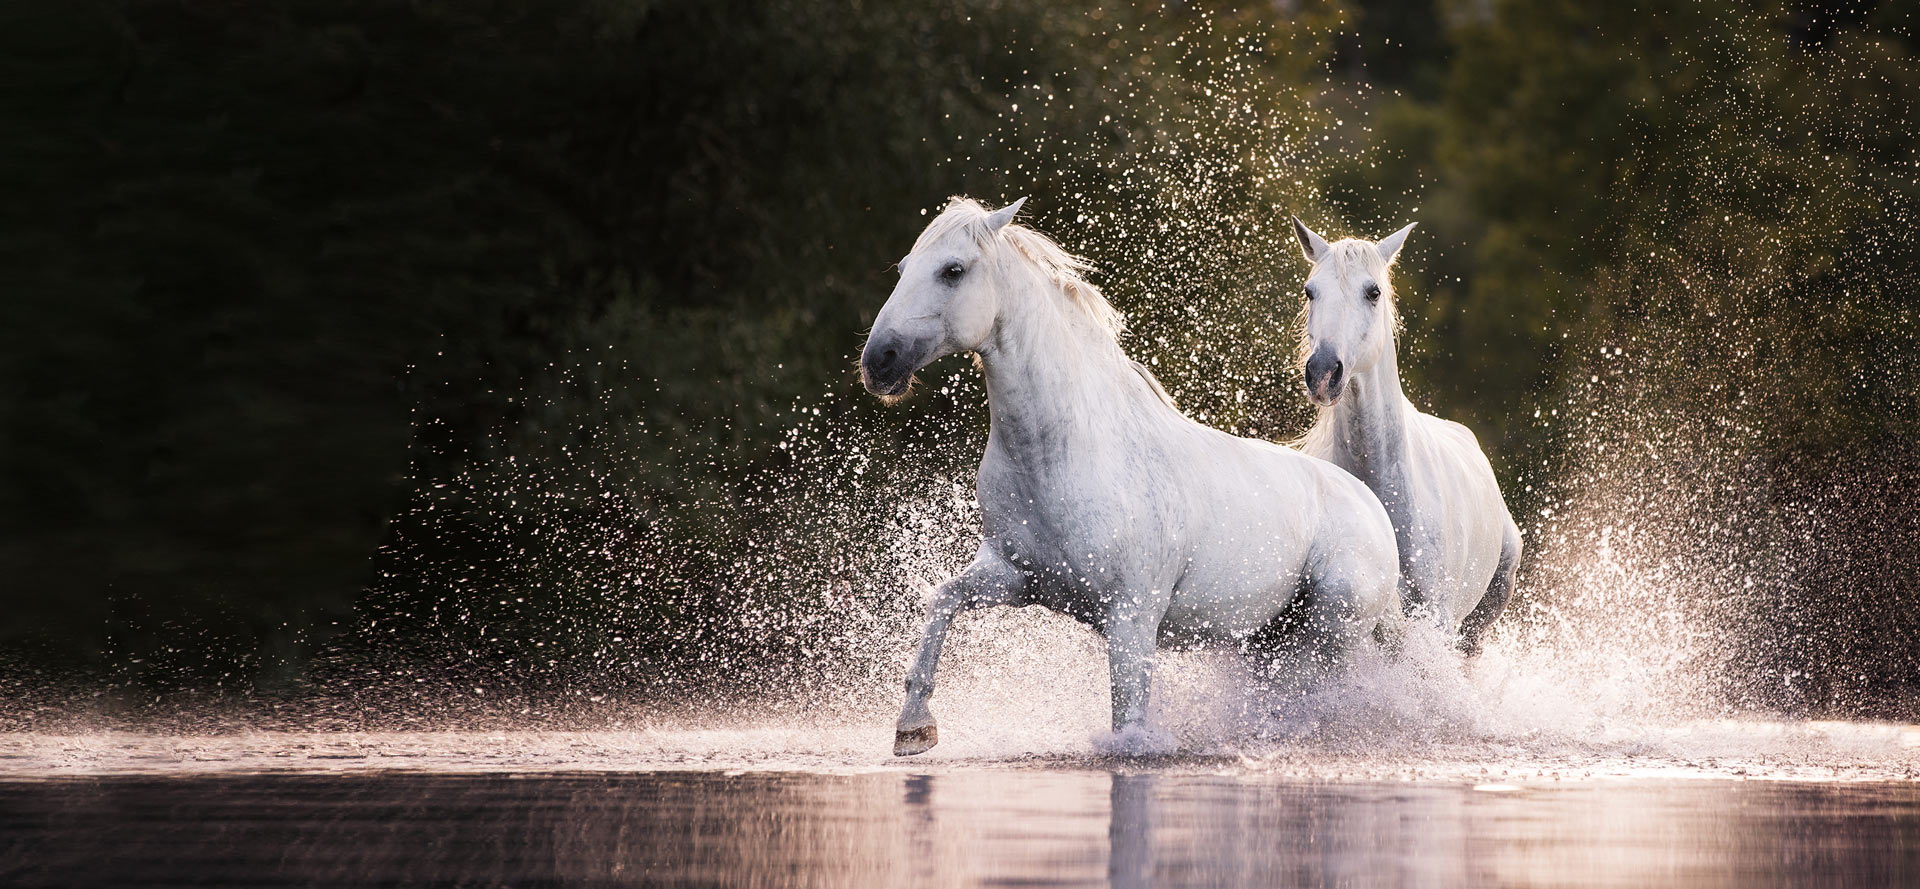 Pferdefotos Würzburg, Pferdefotografie Bayern, Pferdefoto machen,Pferdefotografin, Pferd im Wasser